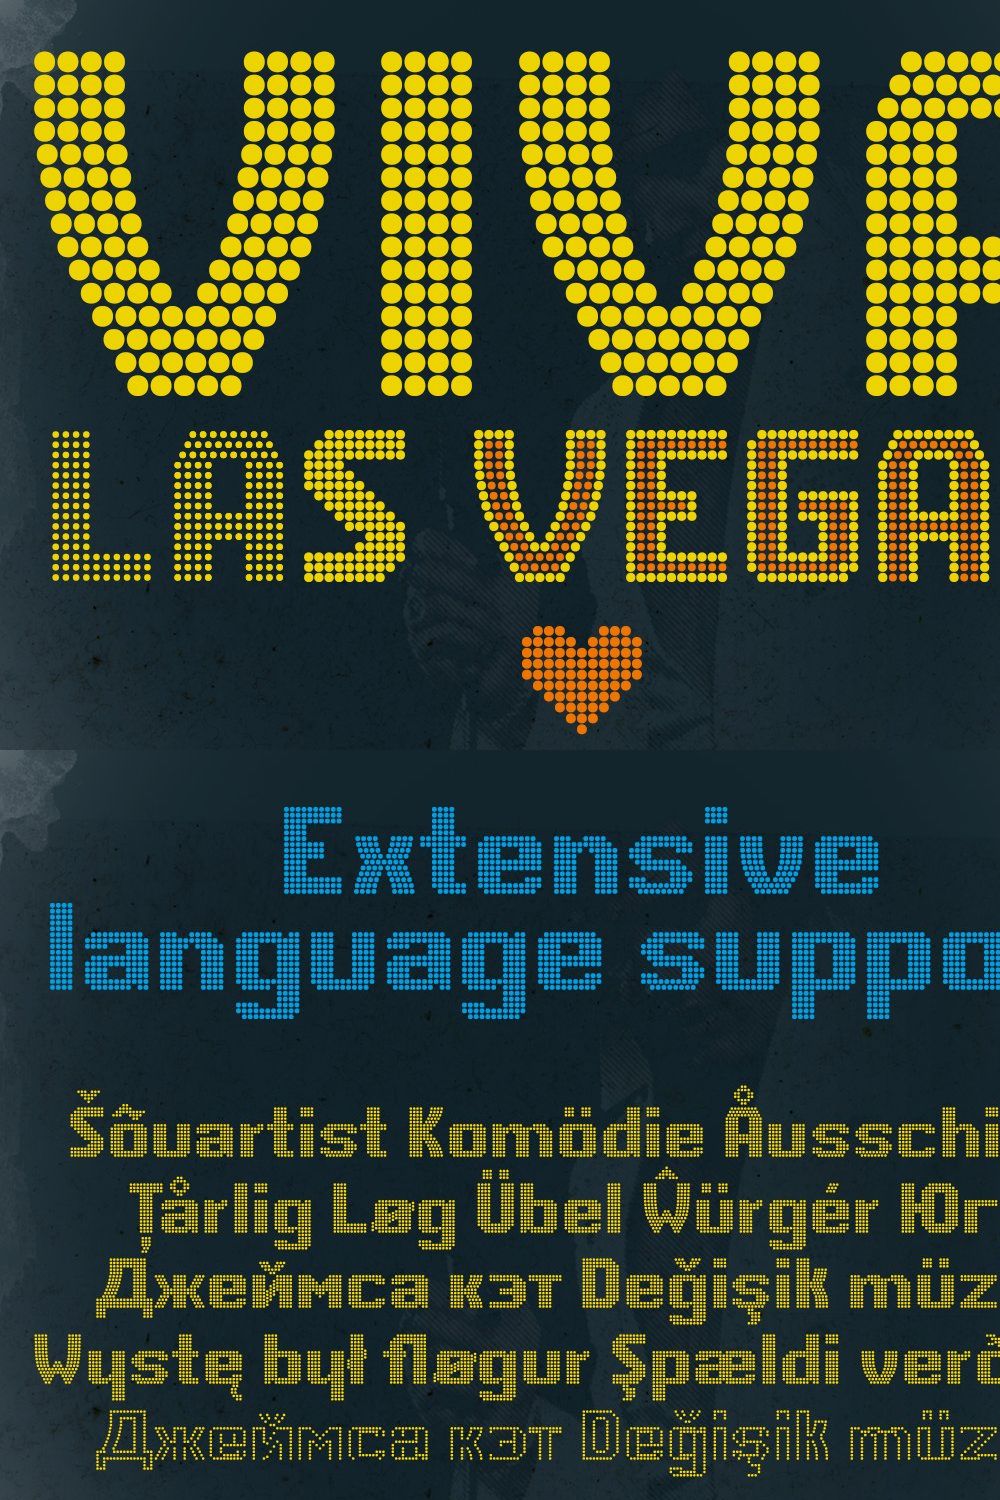 CA Viva Las Vegas pinterest preview image.